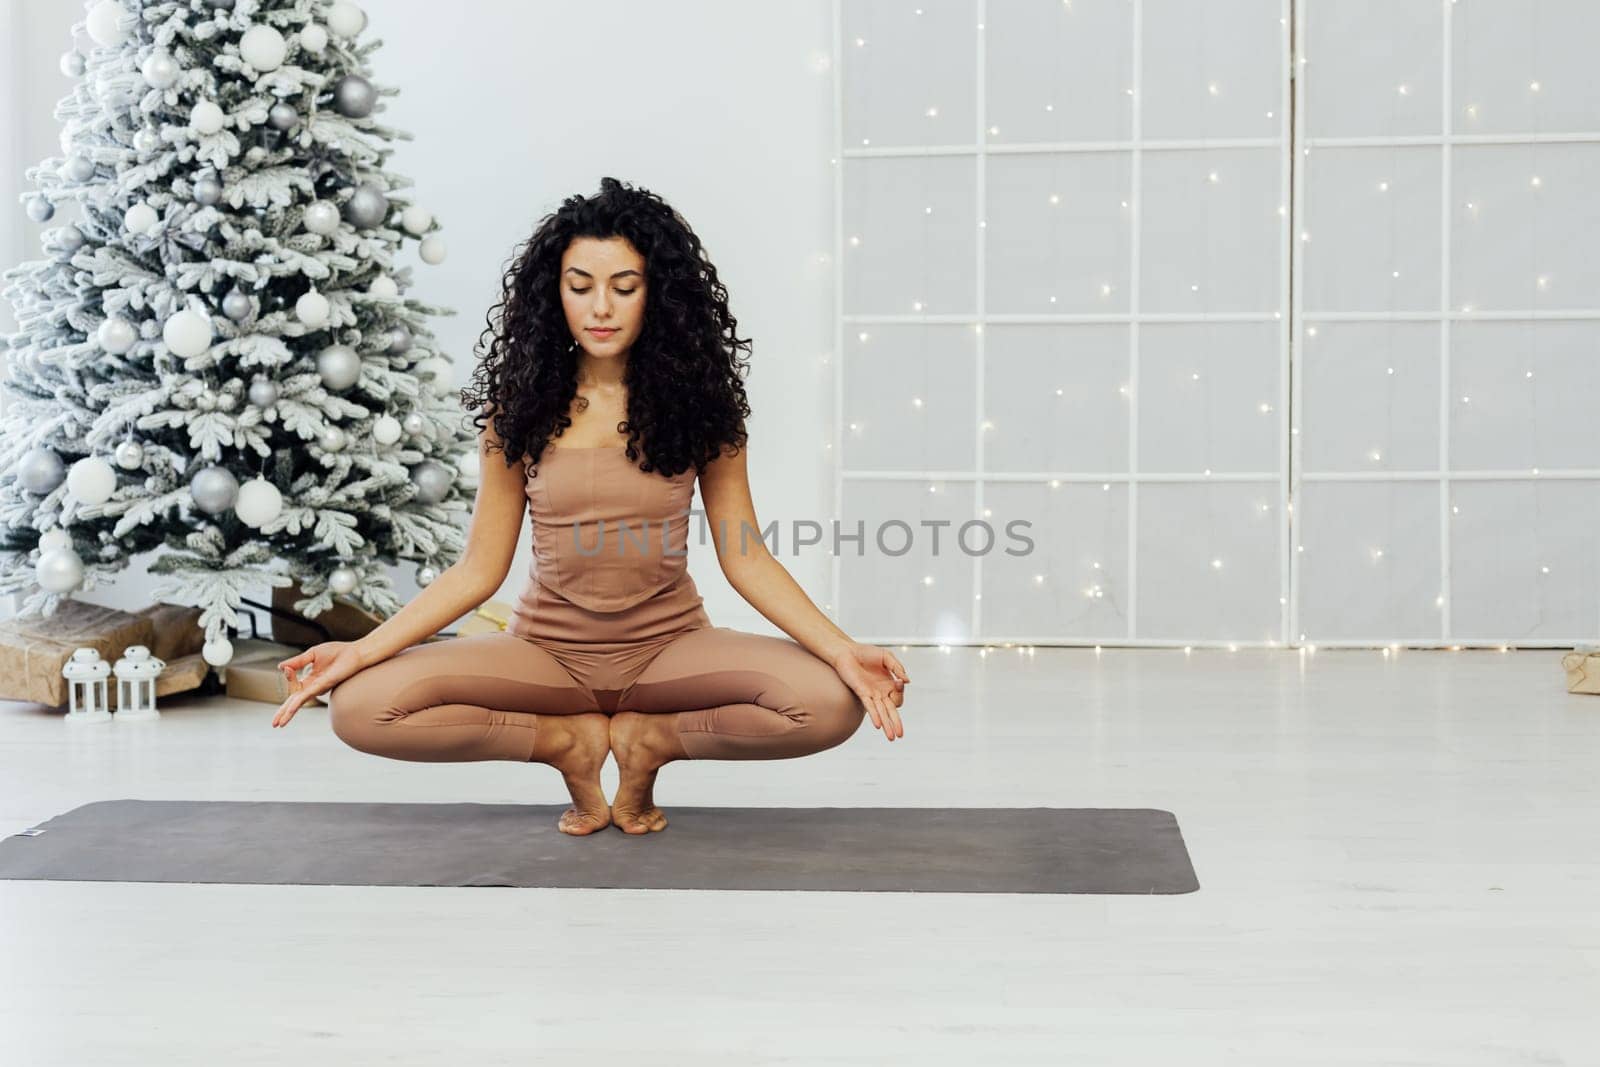 Woman yoga asana gymnastics at Christmas tree New Year by Simakov